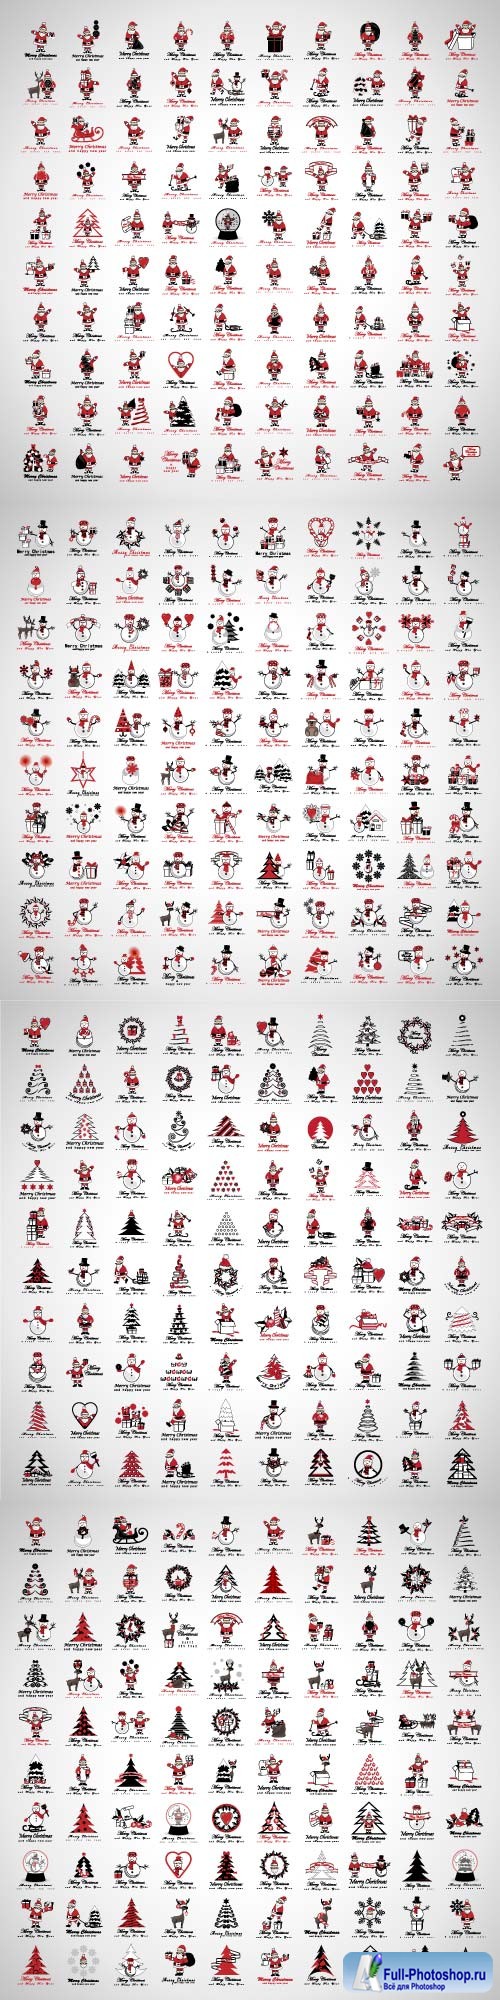 Santa Claus icons and Christmas elements set